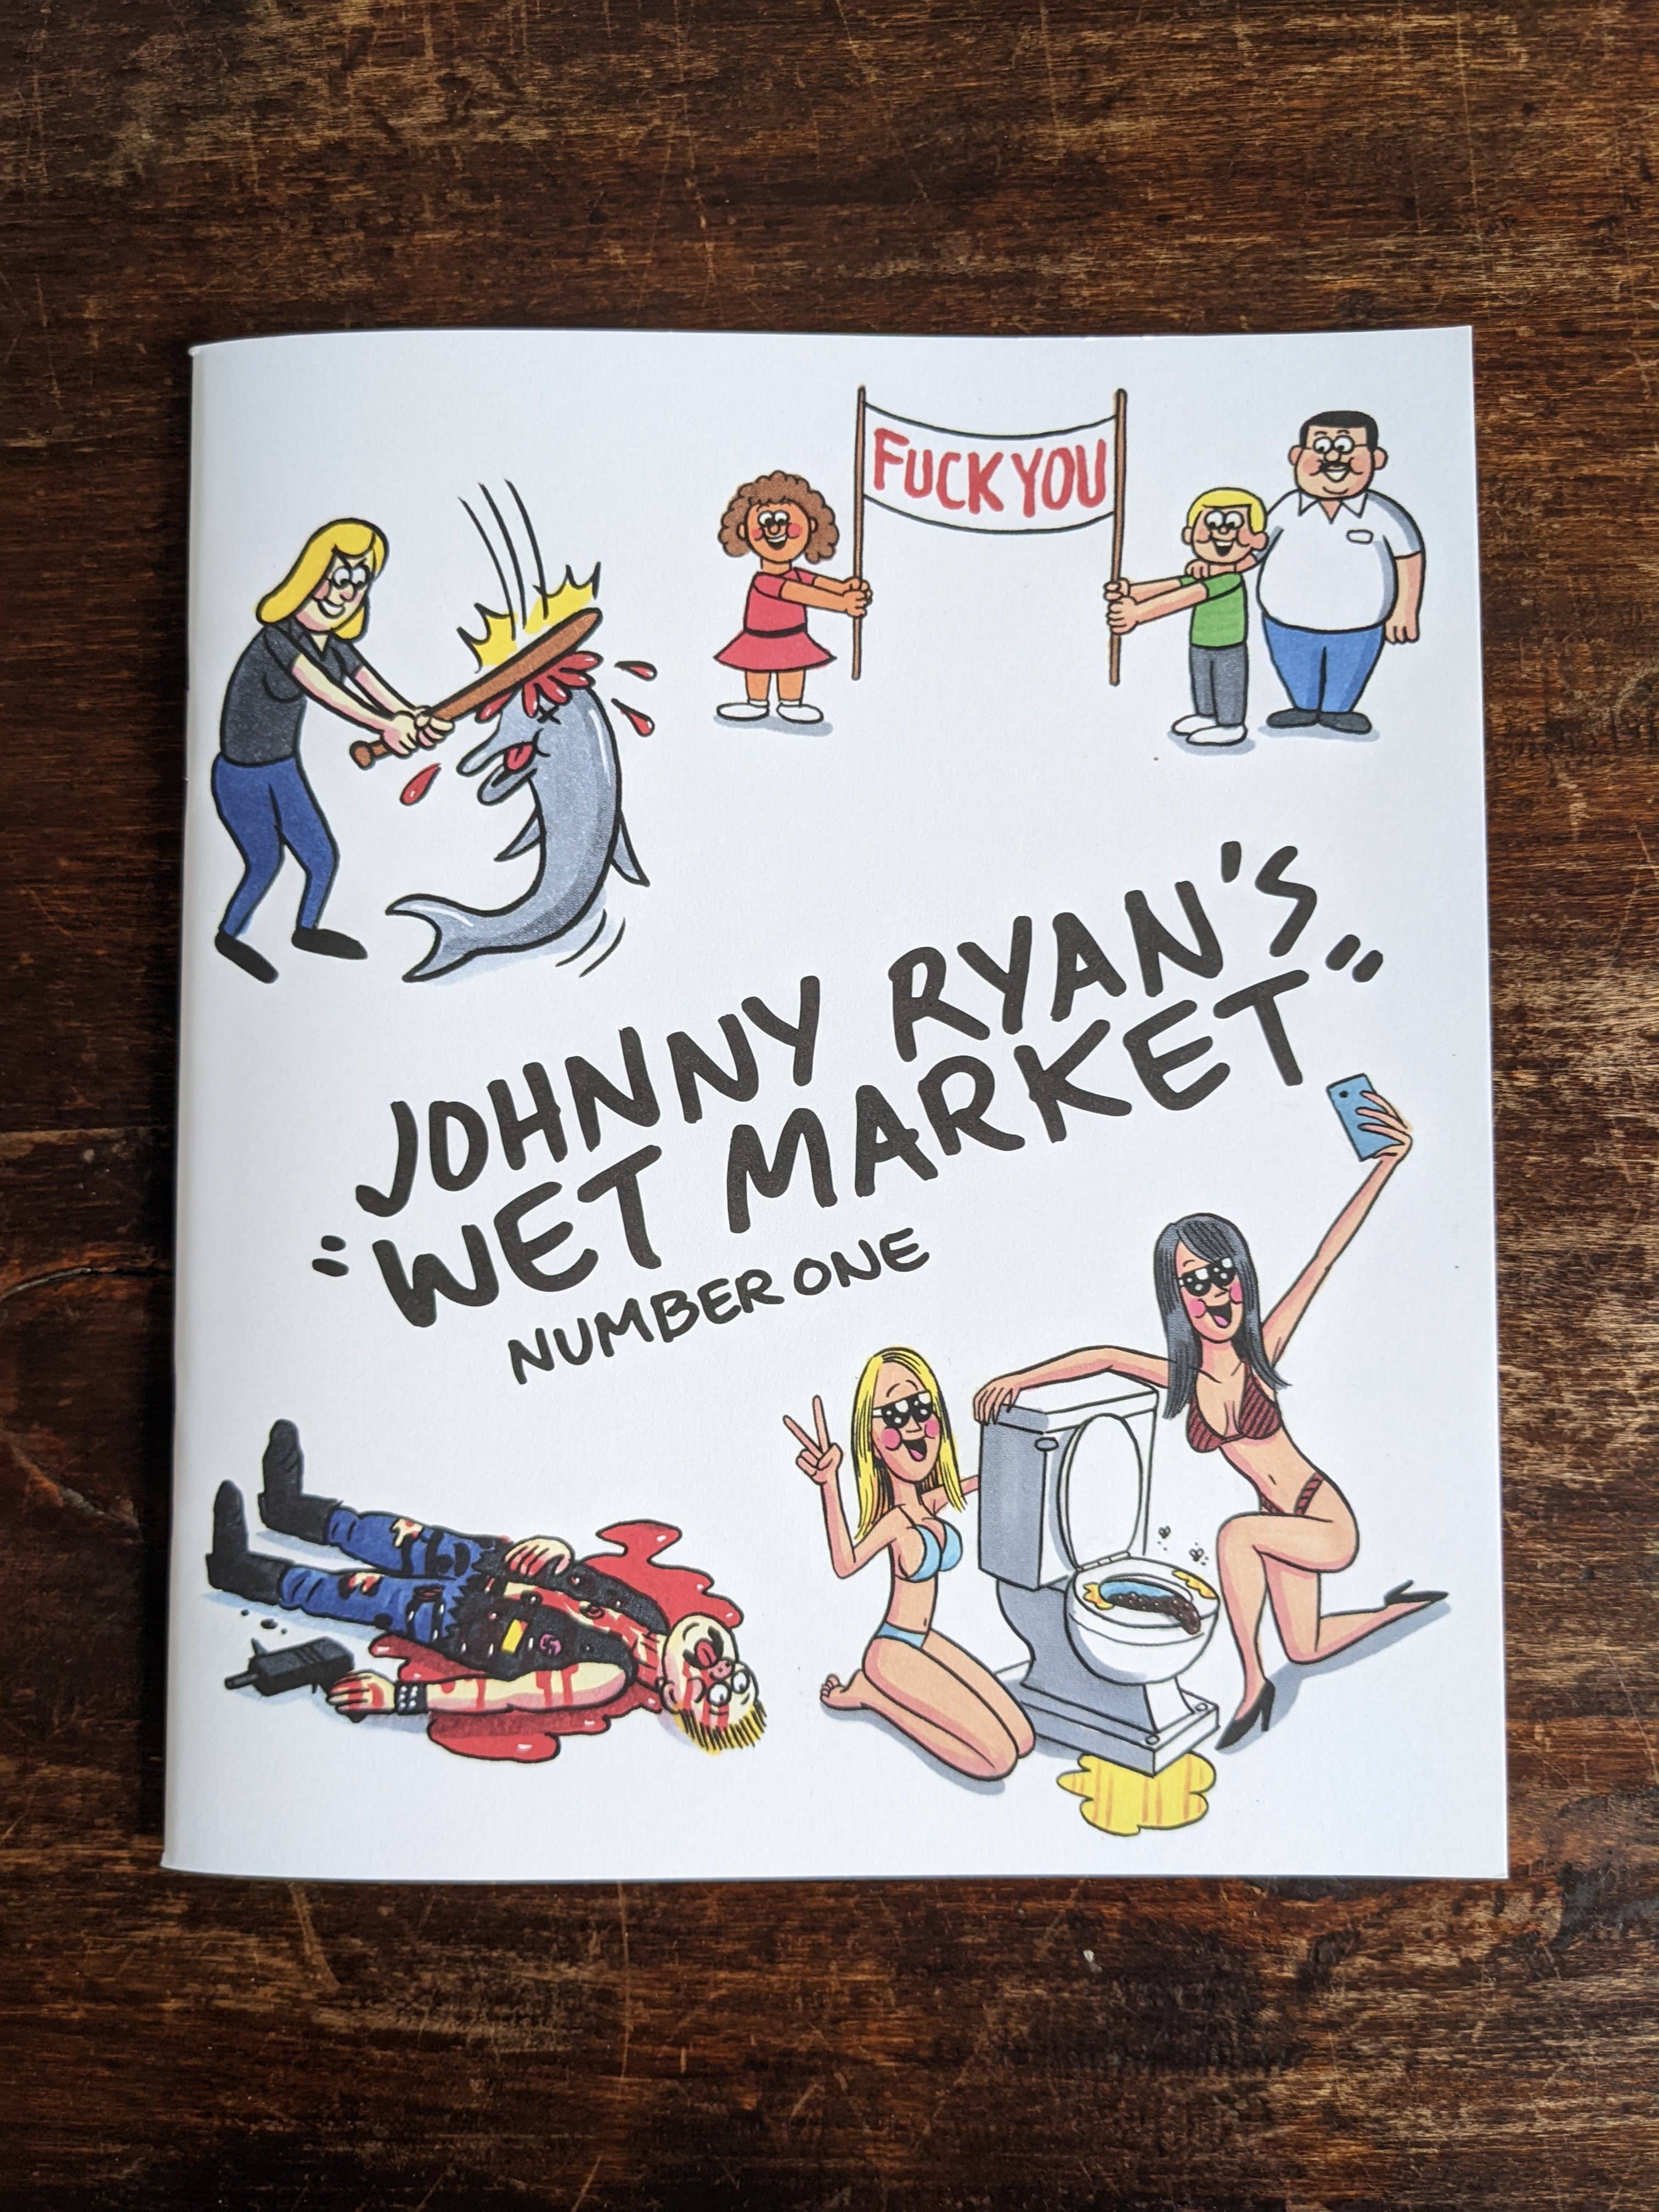 Johnny Ryan's wet market - number one